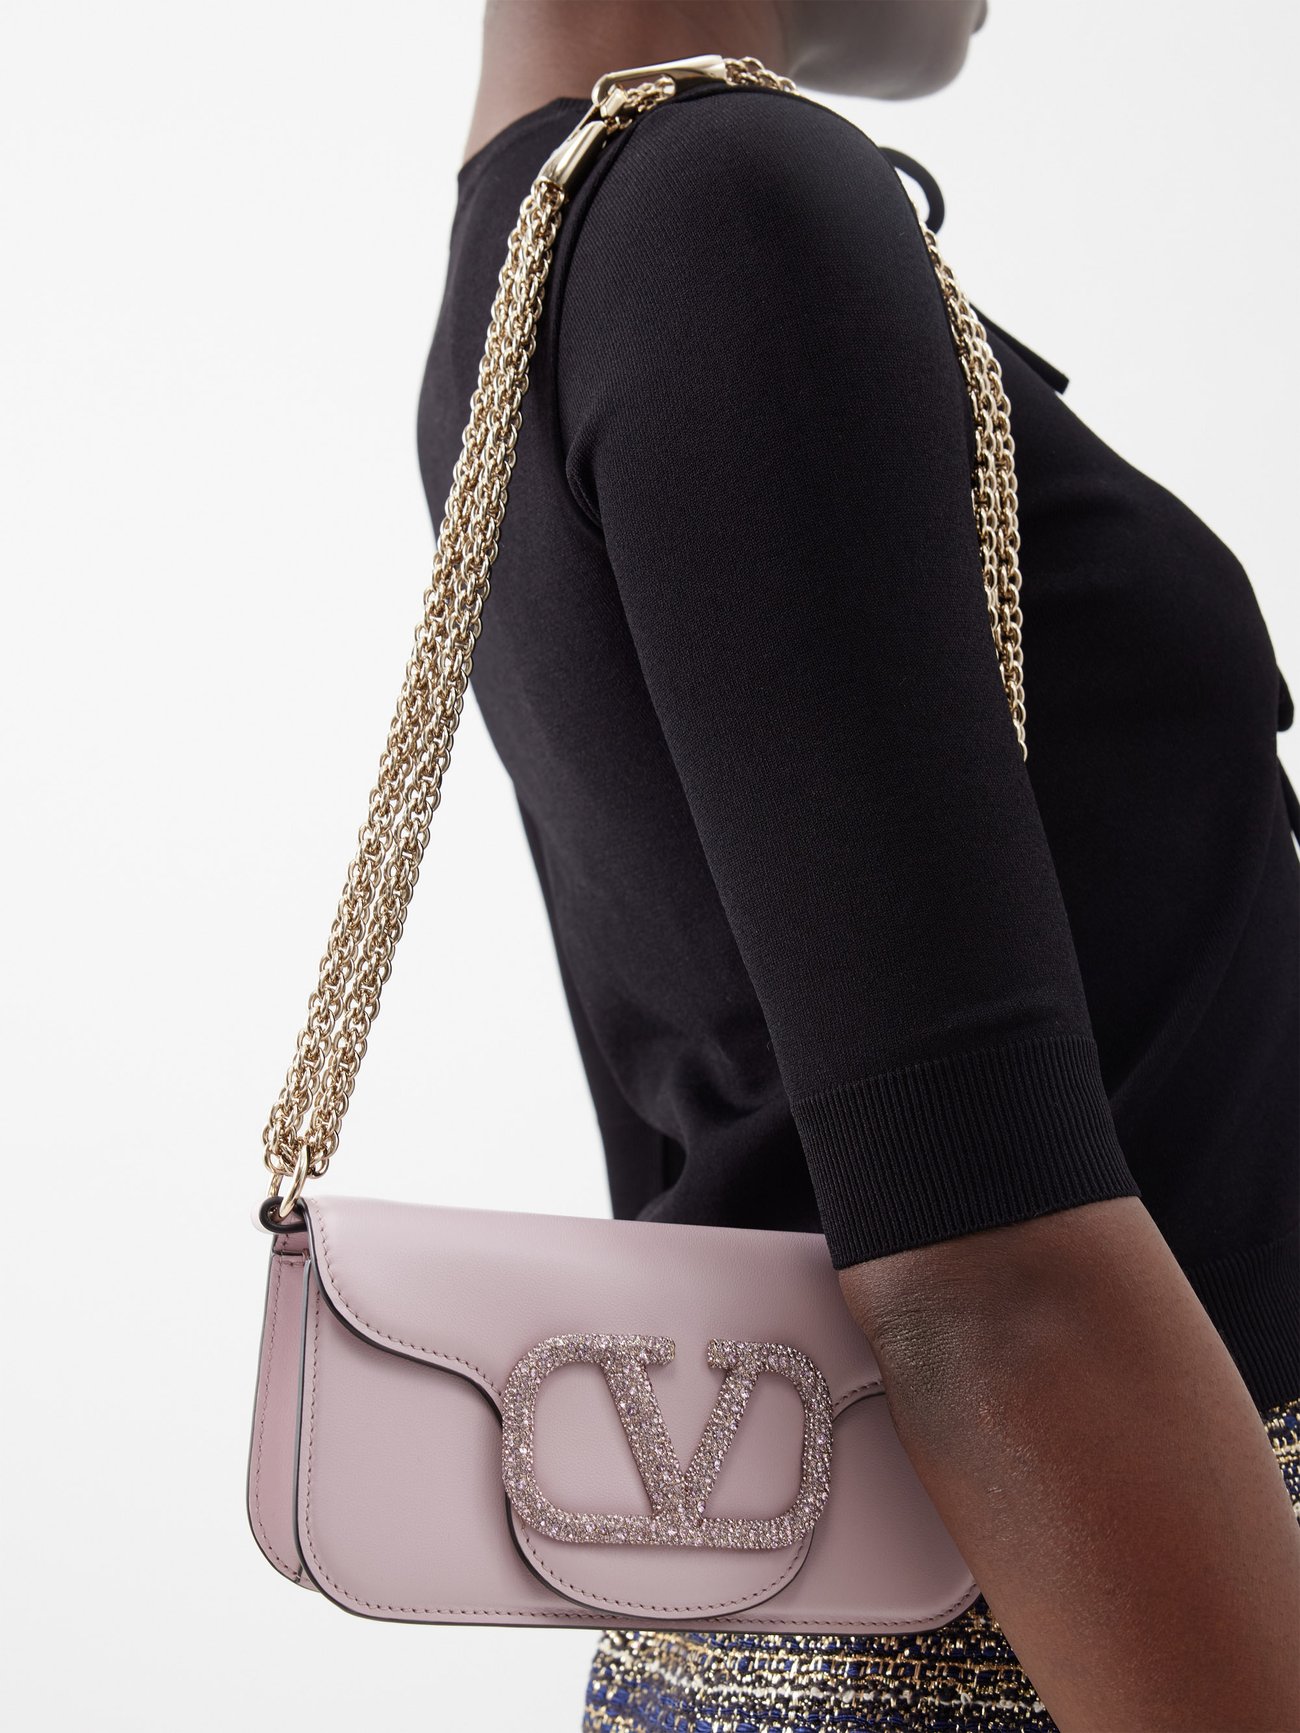 Valentino Garavani | Small Locò Shoulder Bag with 3D Embroidery | Pink